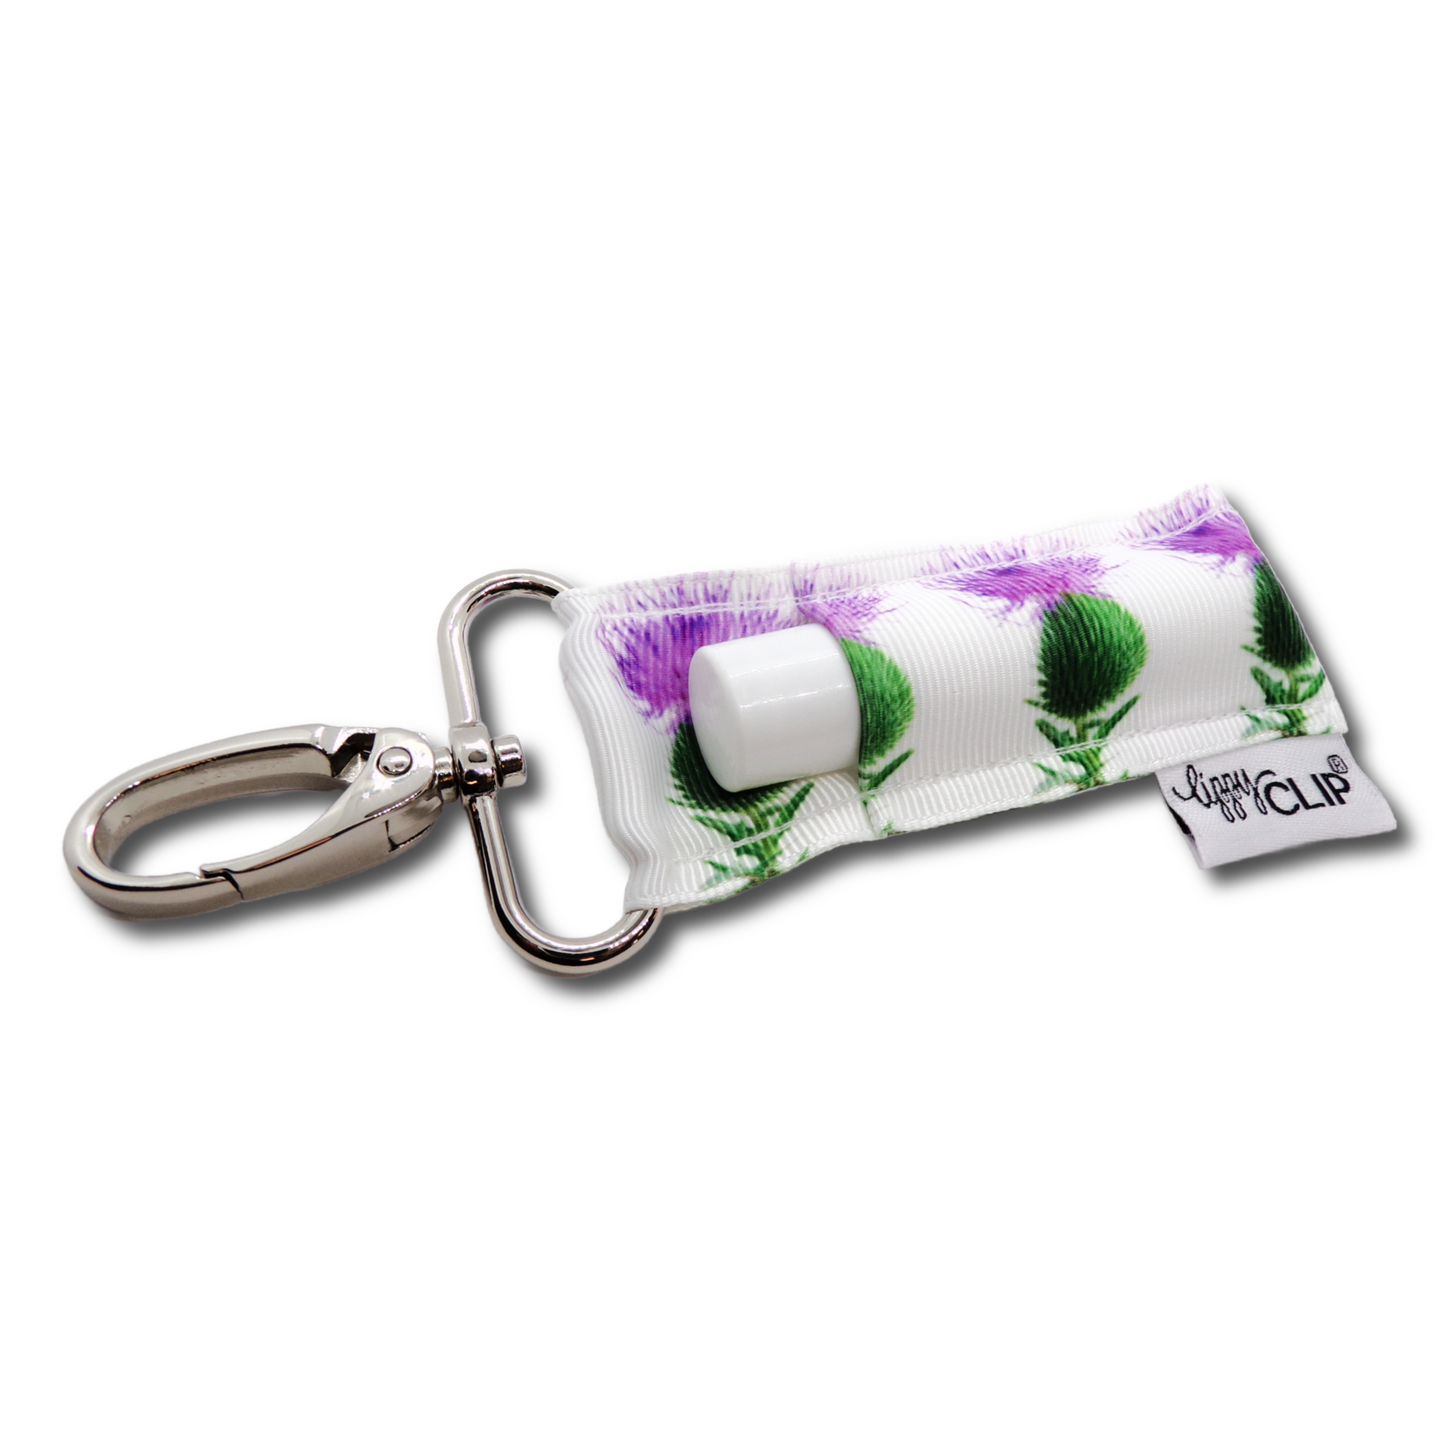 Lilac Thistle LippyClip® Lip Balm Holder